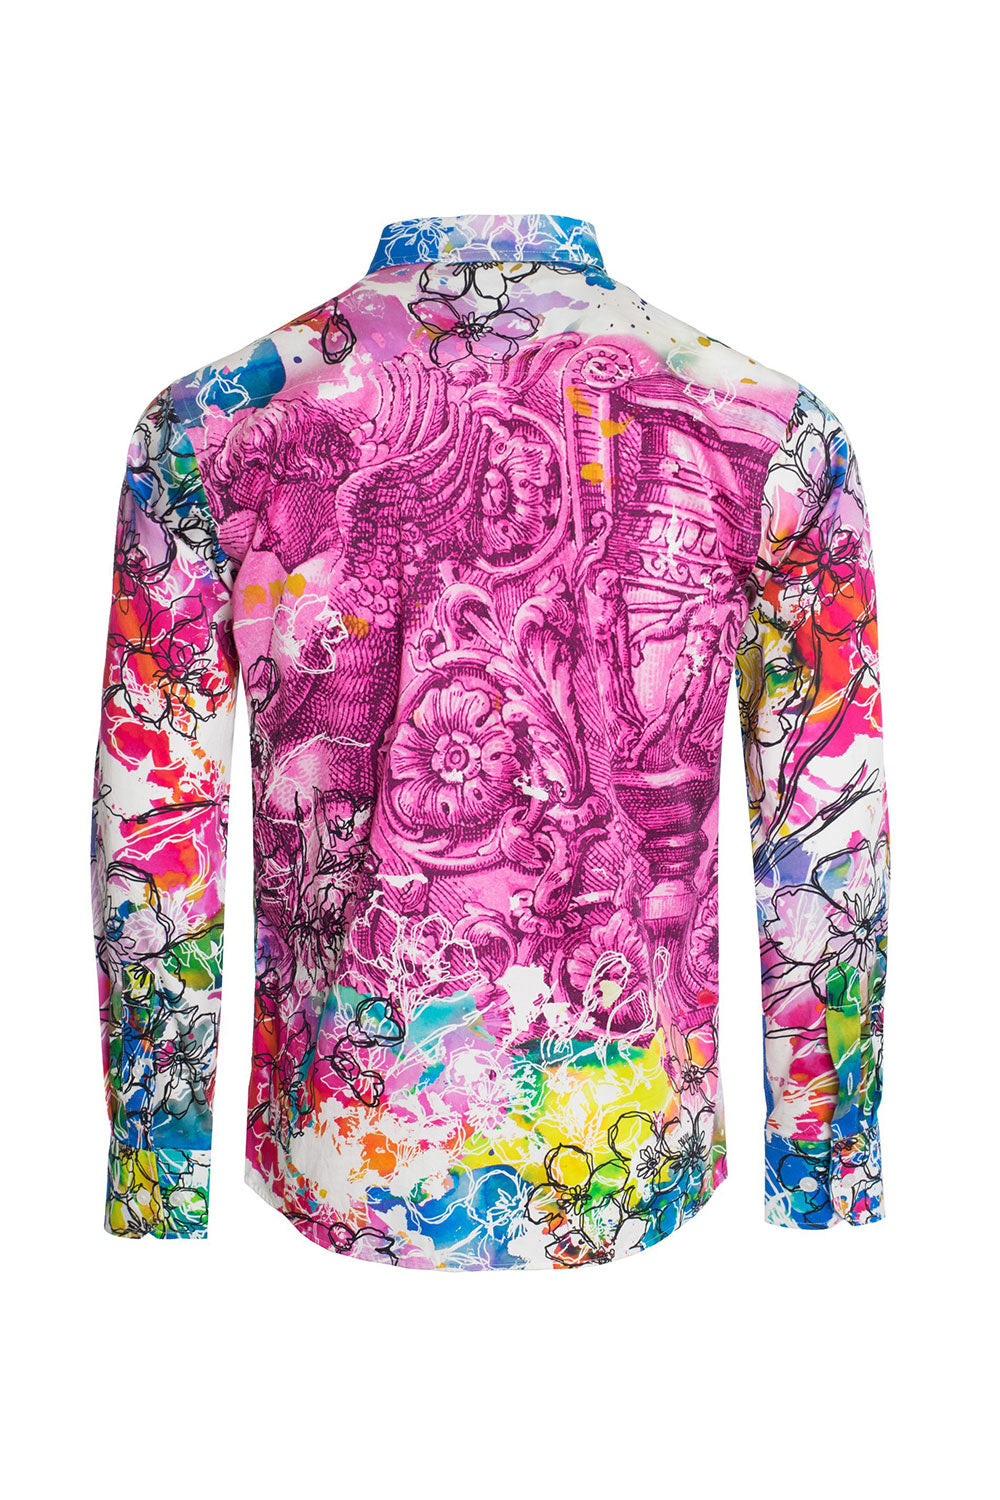 BARABAS Men's Watercolor Floral Printed Button-Down Shirts SP208 